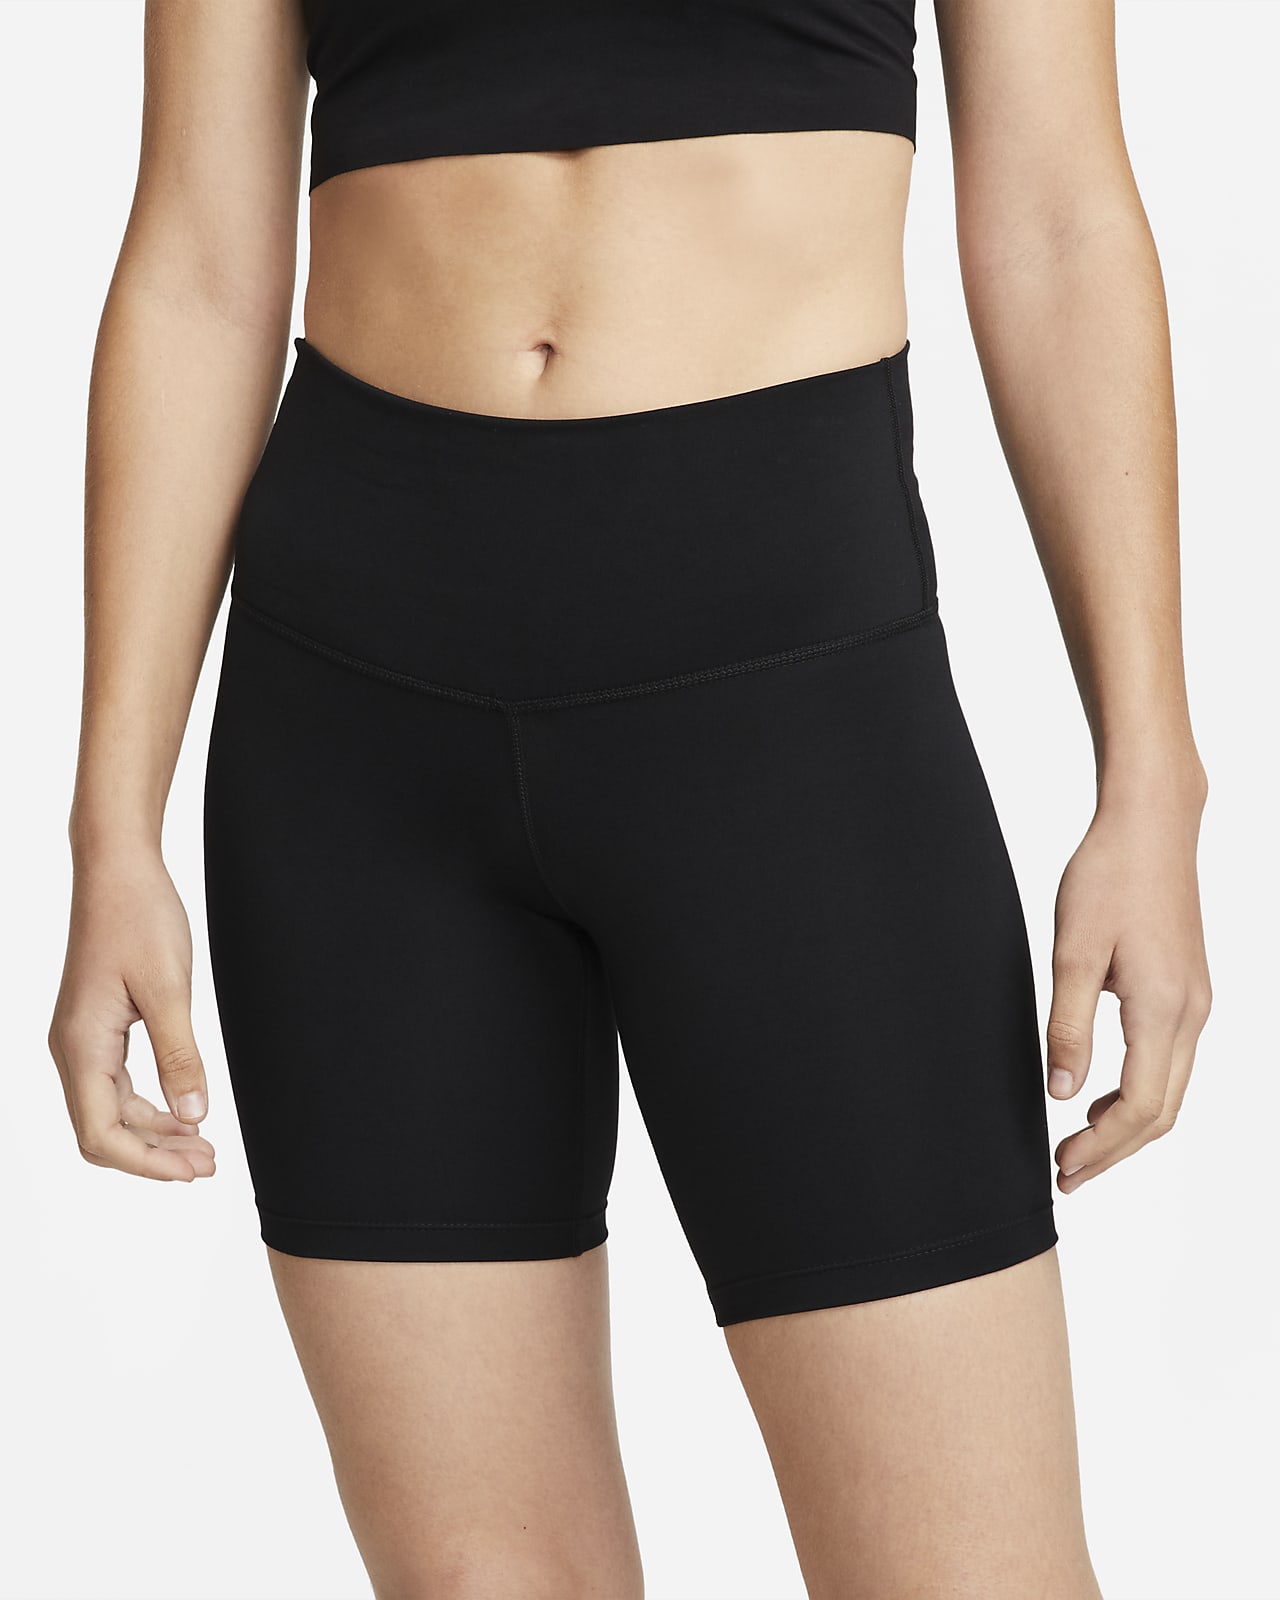 GetUSCart- IUGA Yoga Shorts Workout Shorts for Women with Pockets High  Waisted Biker Shorts for Women Running Shorts with Side Pockets